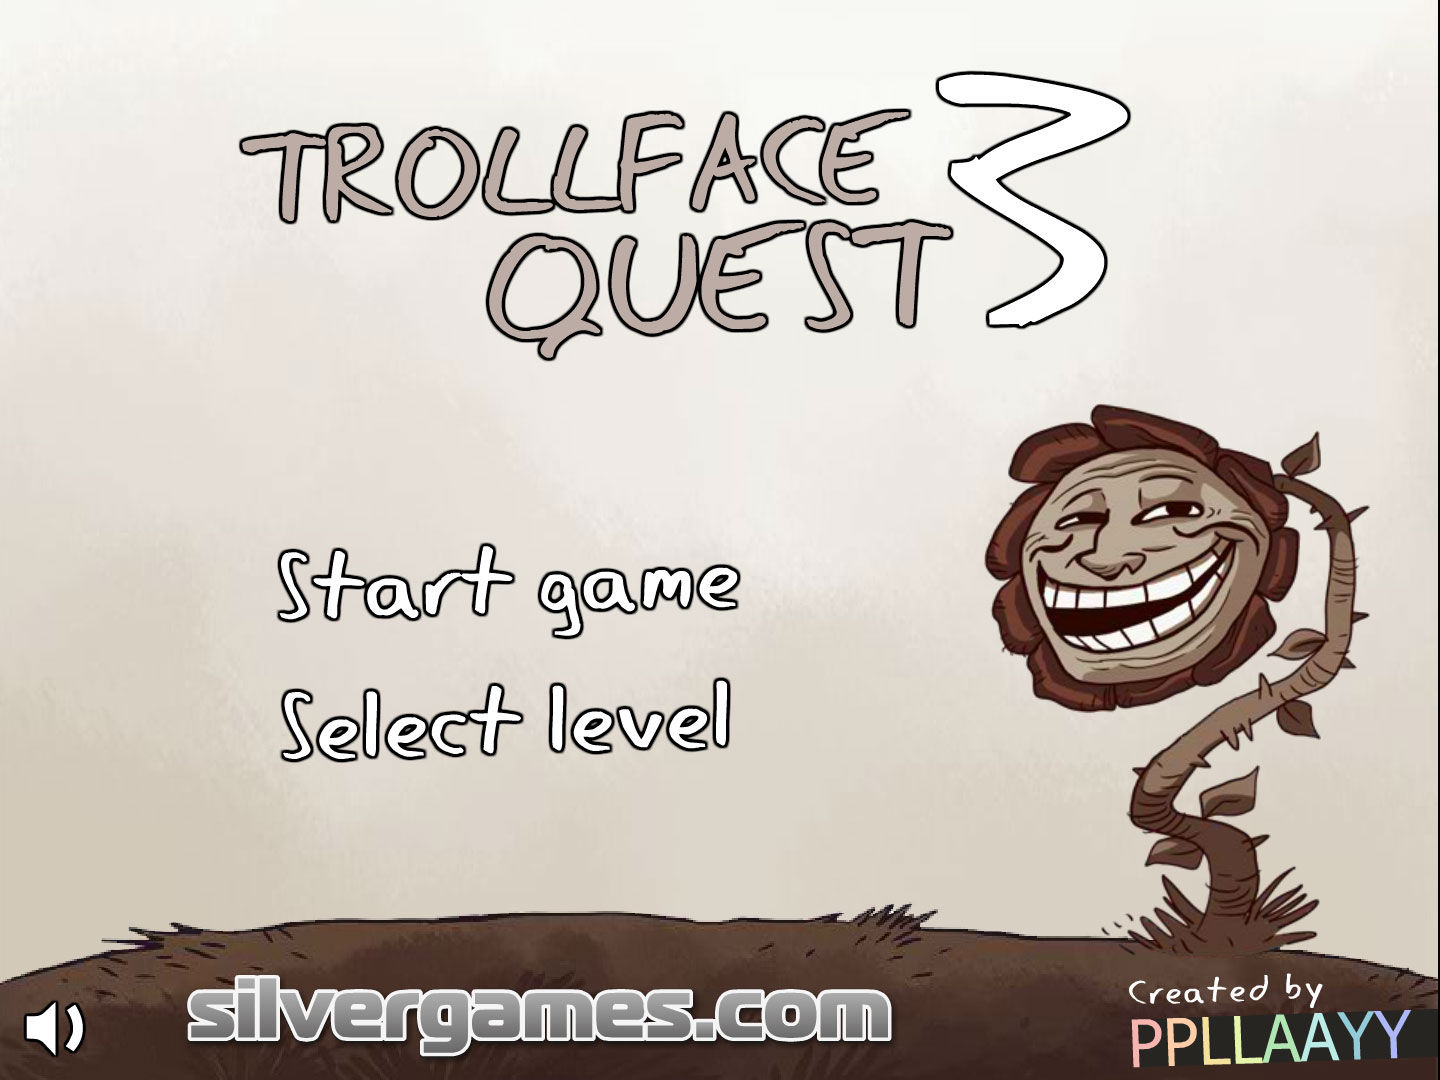 Trollface quest 3. Троллфейс. Trollface игра. Игра троллфейс квест 3. Troll face Quest.